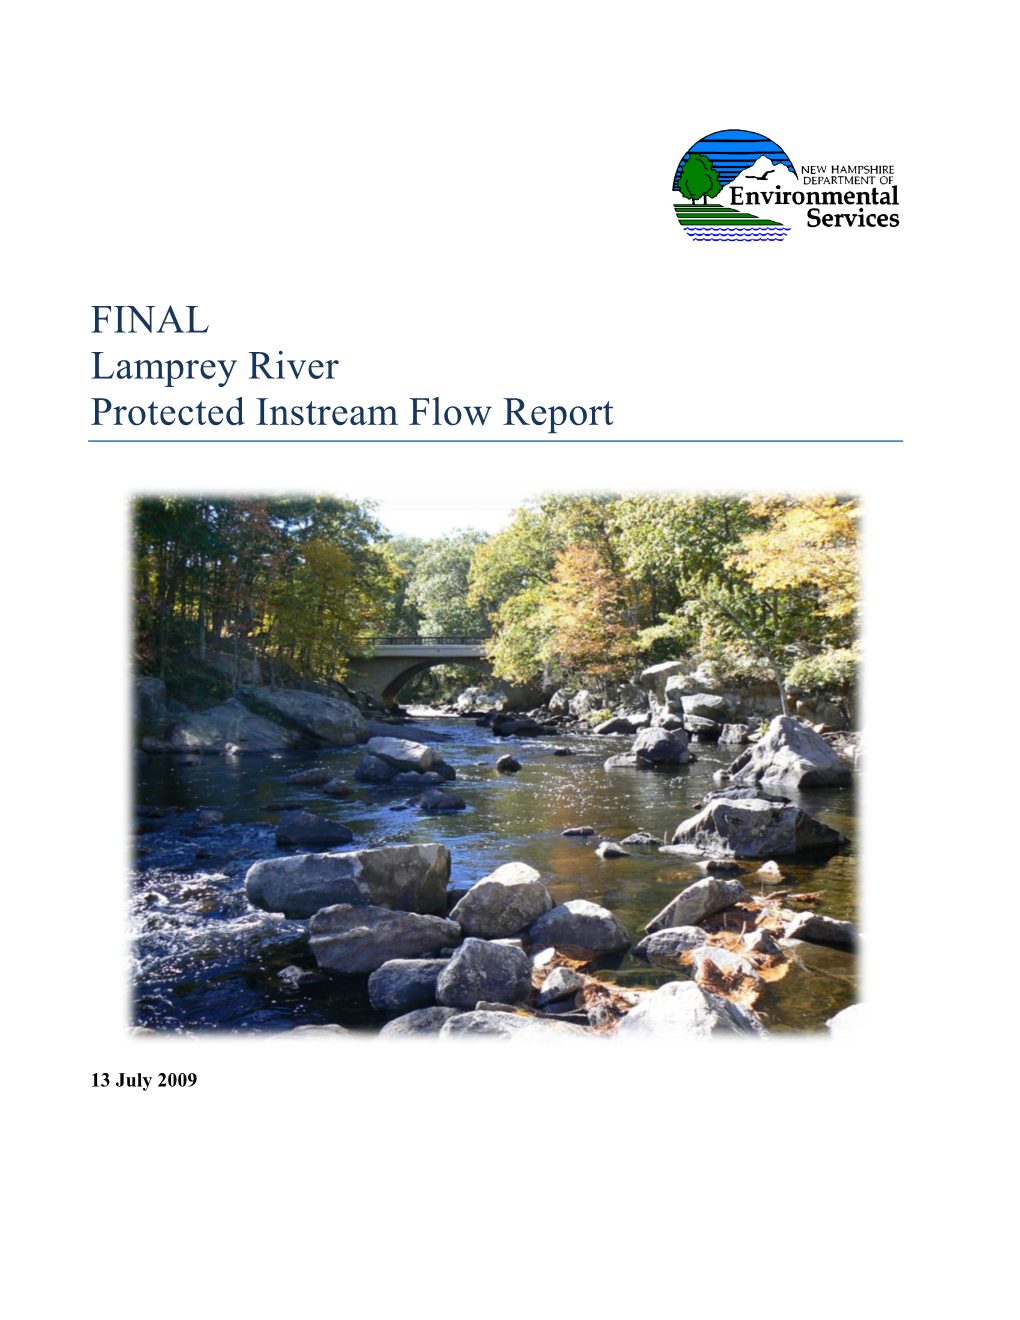 FINAL Lamprey River Protected Instream Flow Report